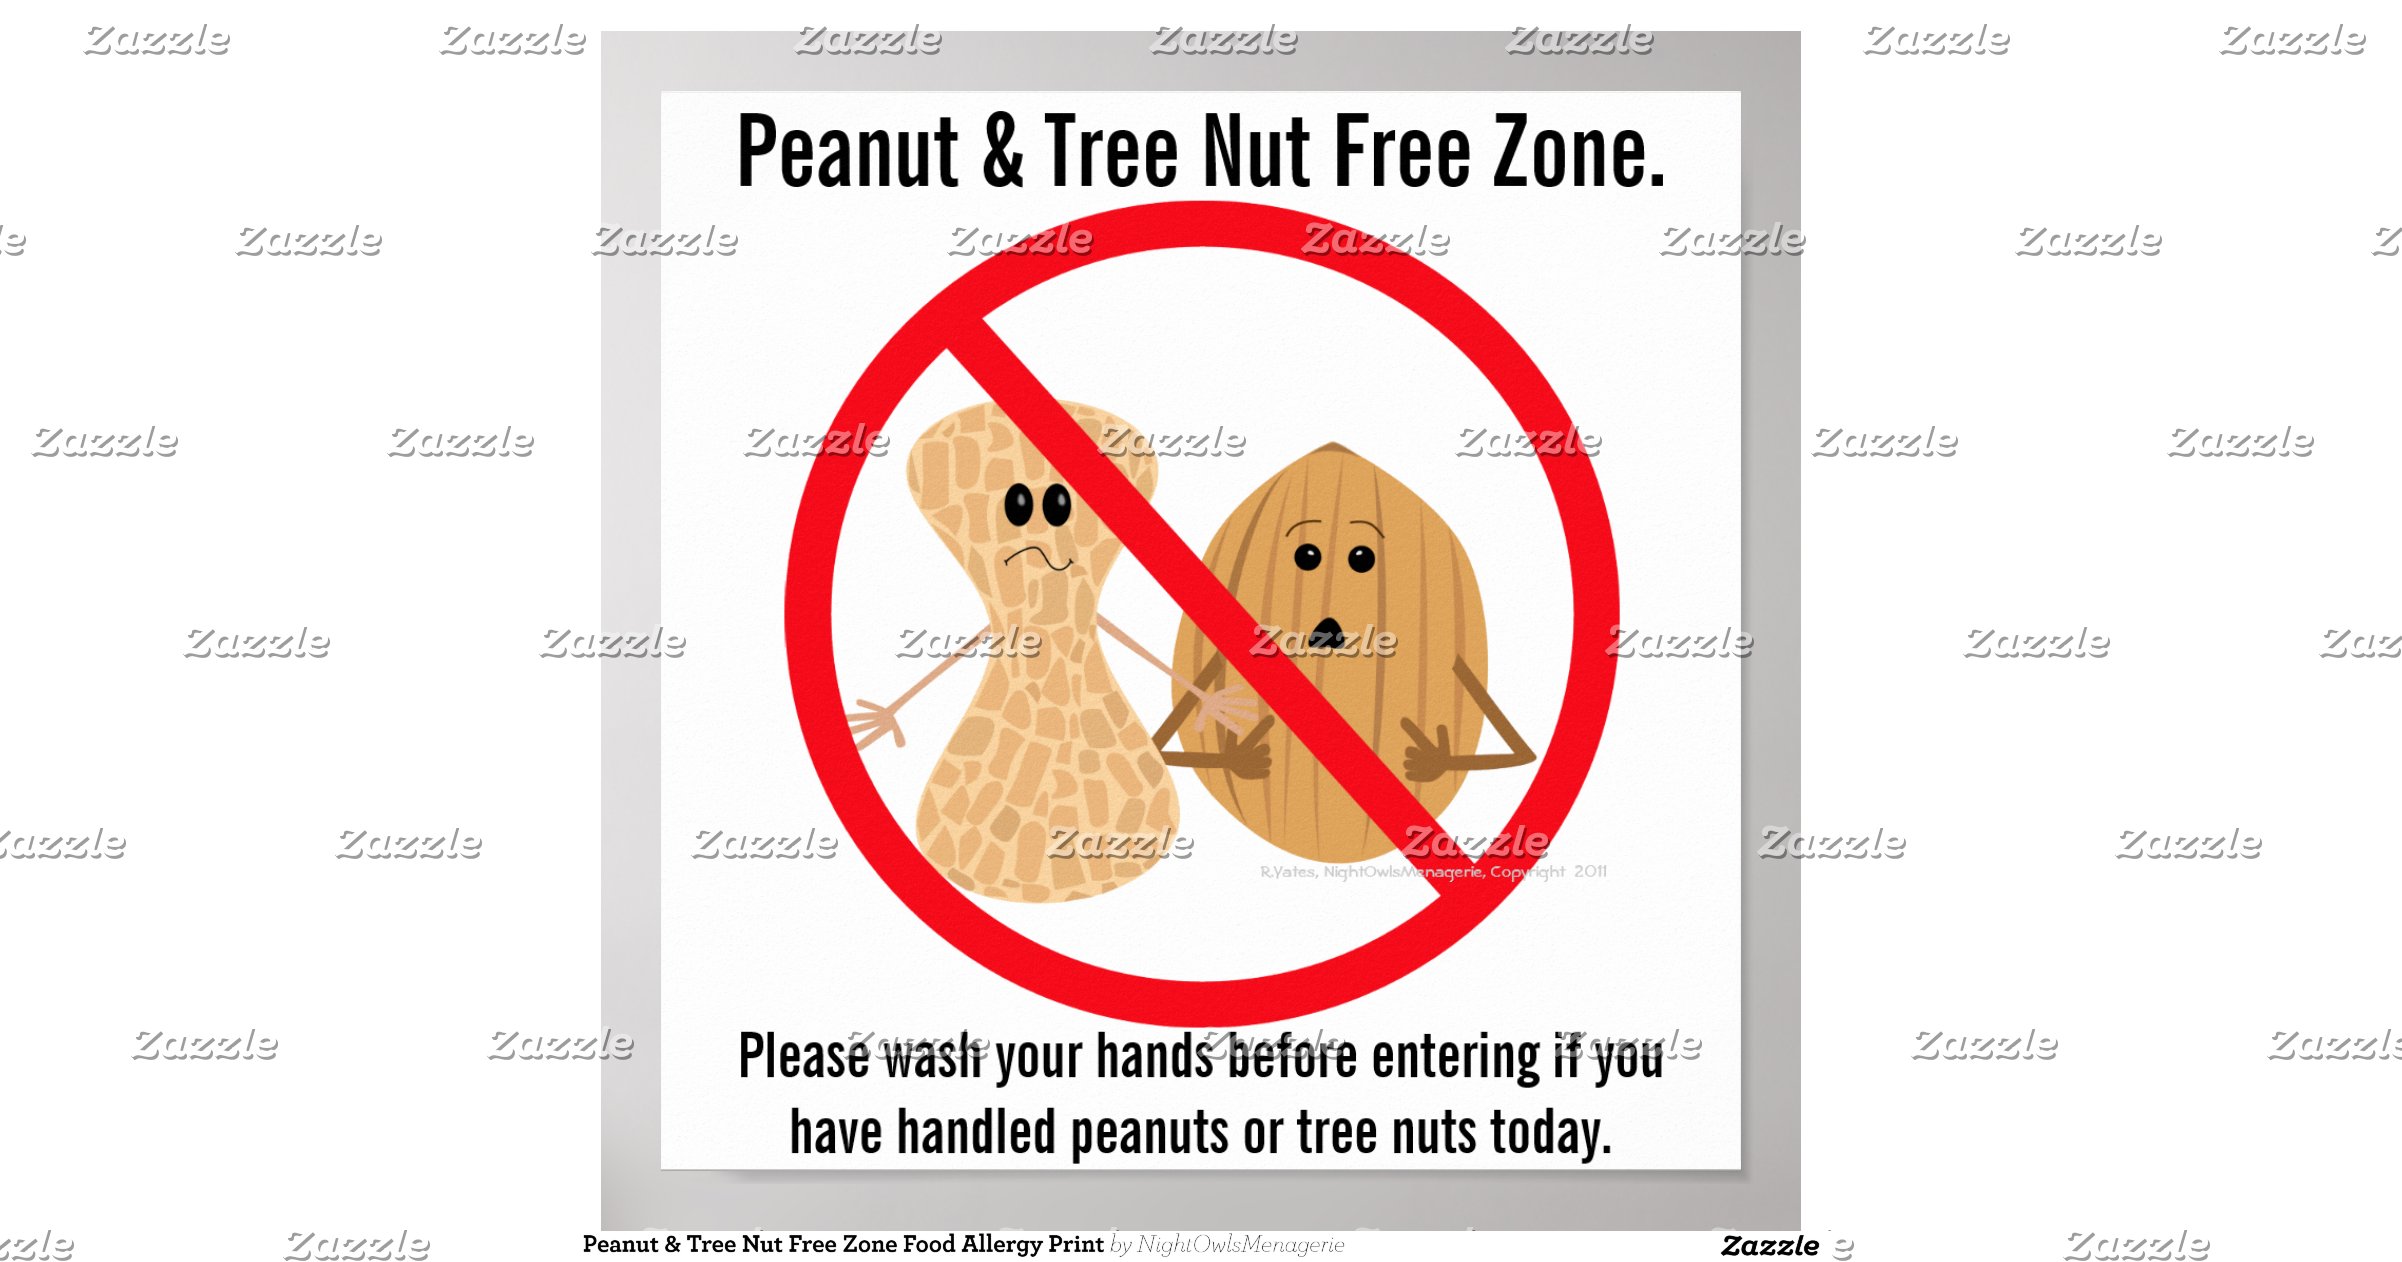 peanut_tree_nut_free_zone_food_allergy_print-re63eb5547e4f42d7a4c35ba82054637f_wad ...2468 x 1296